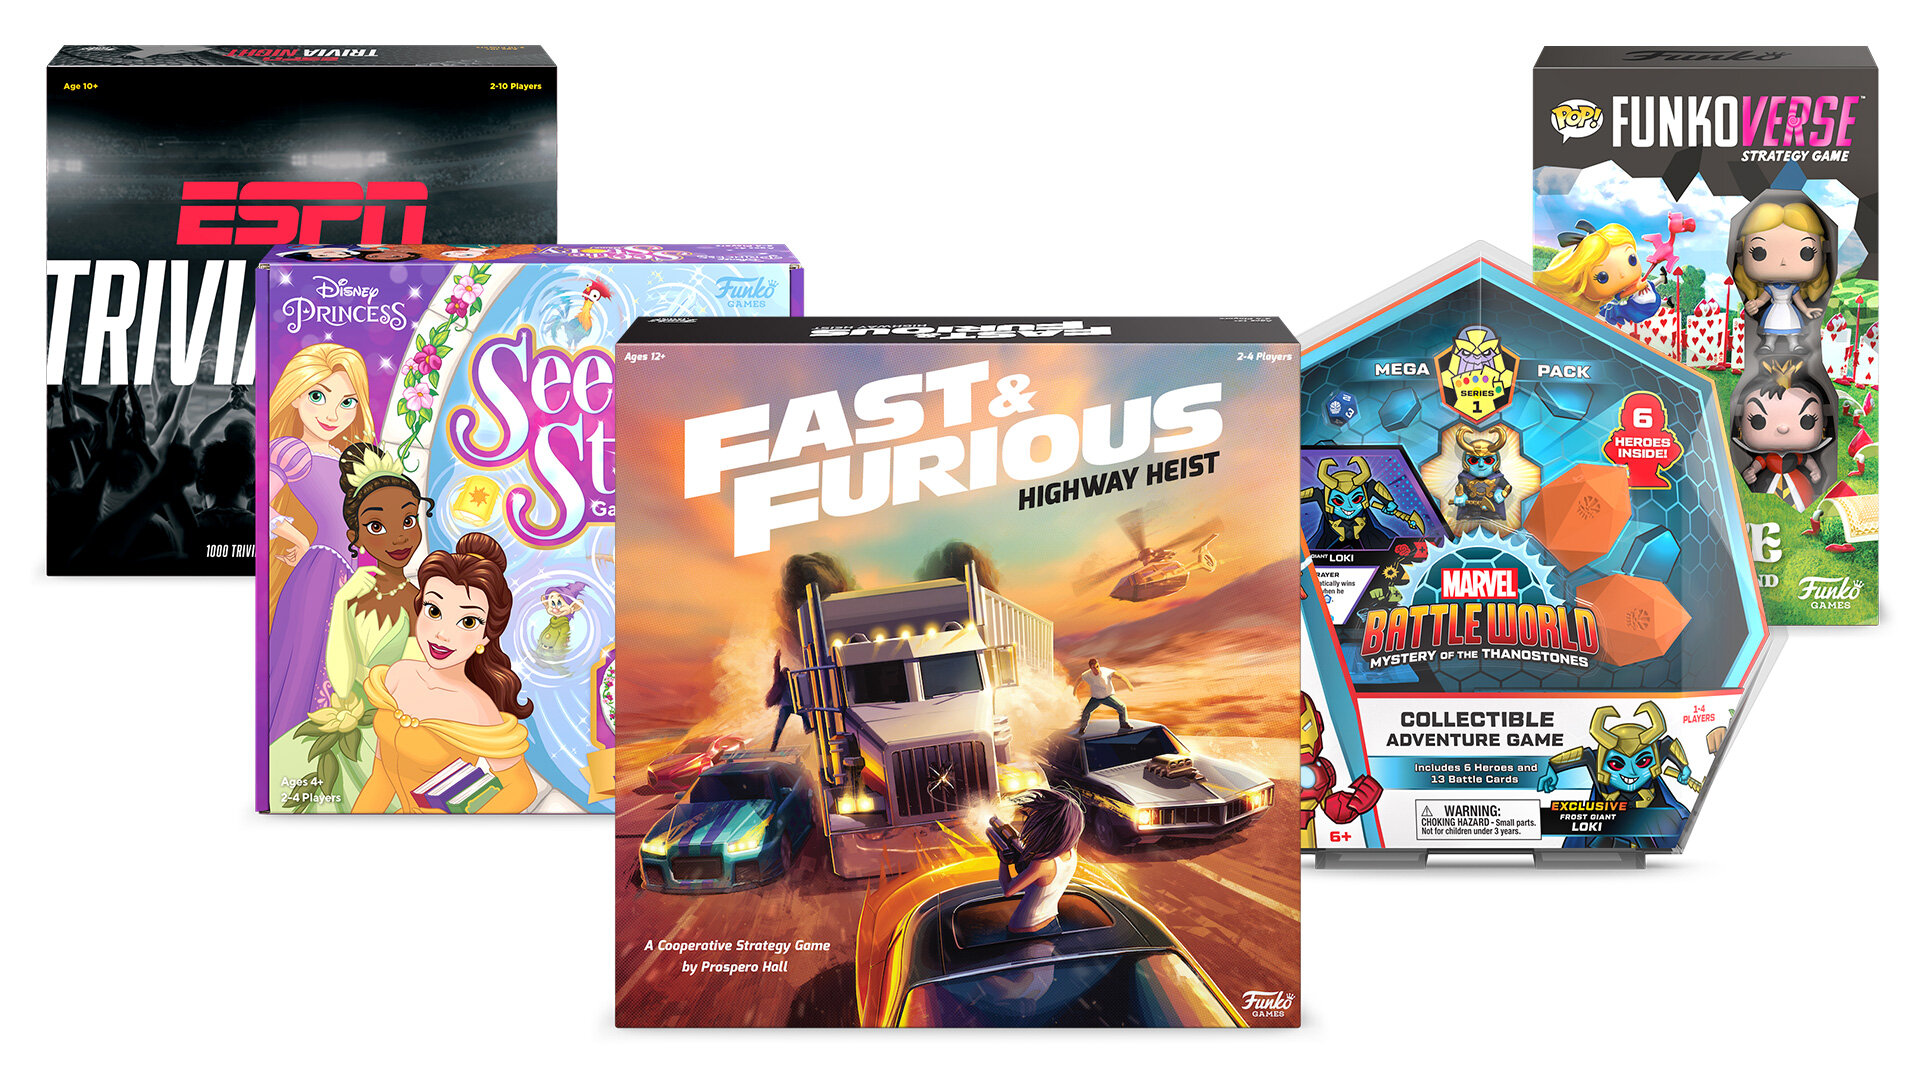 Fast & Furious: Highway Heist, Board Game